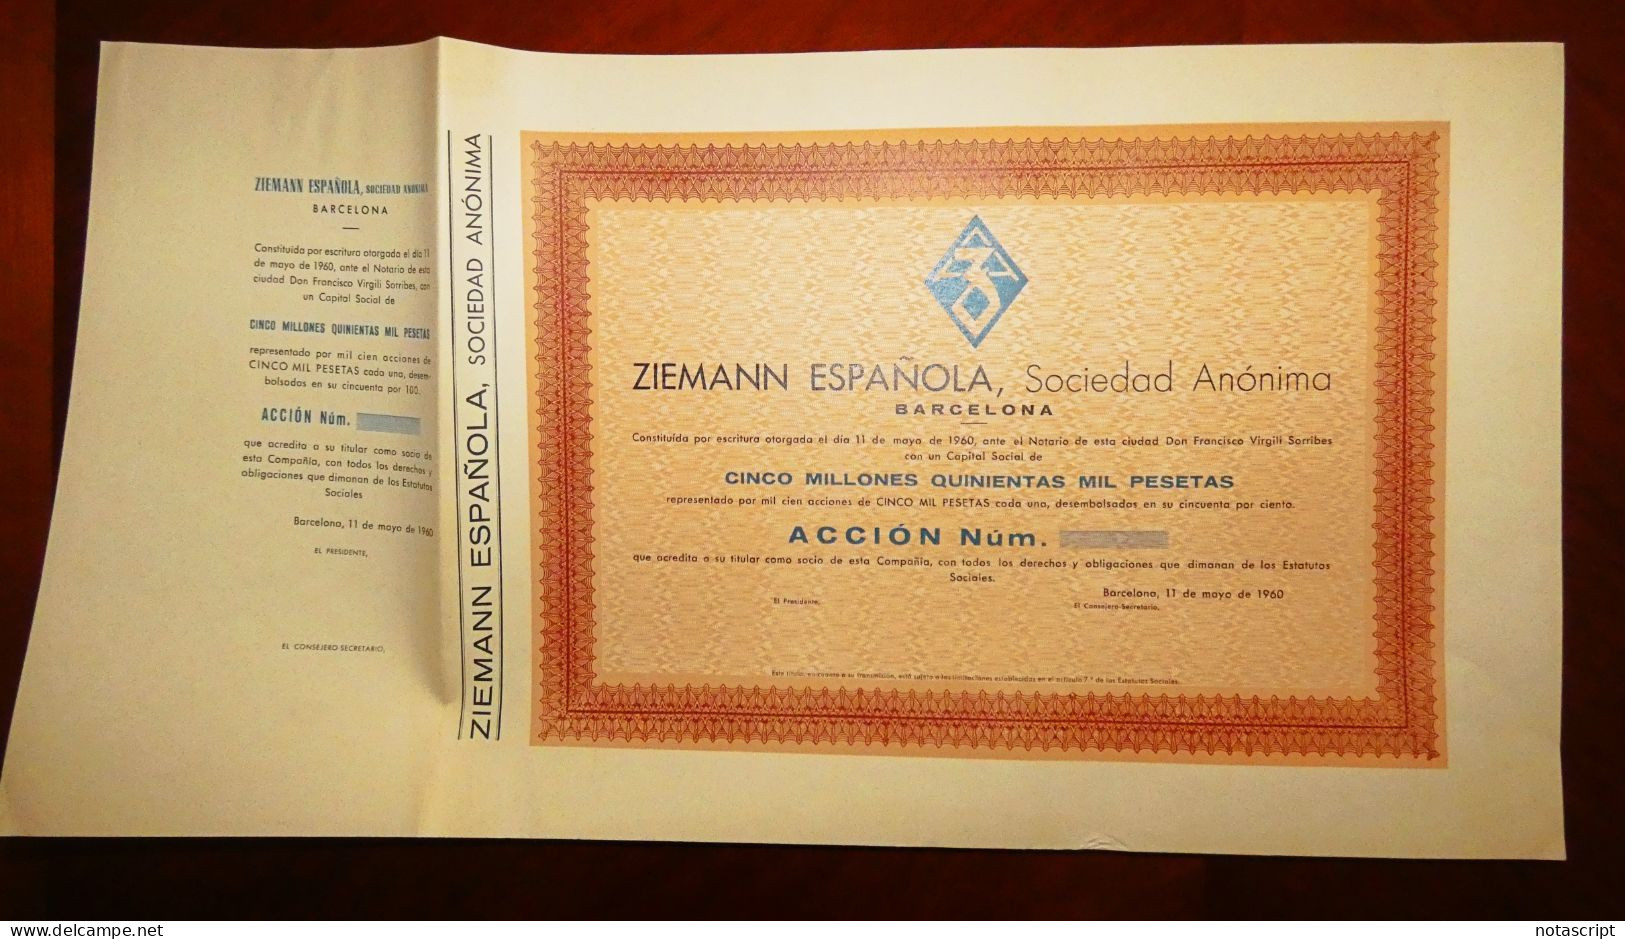 Ziemann Española SA, Barcelona 1960, Share Certificate - Industry